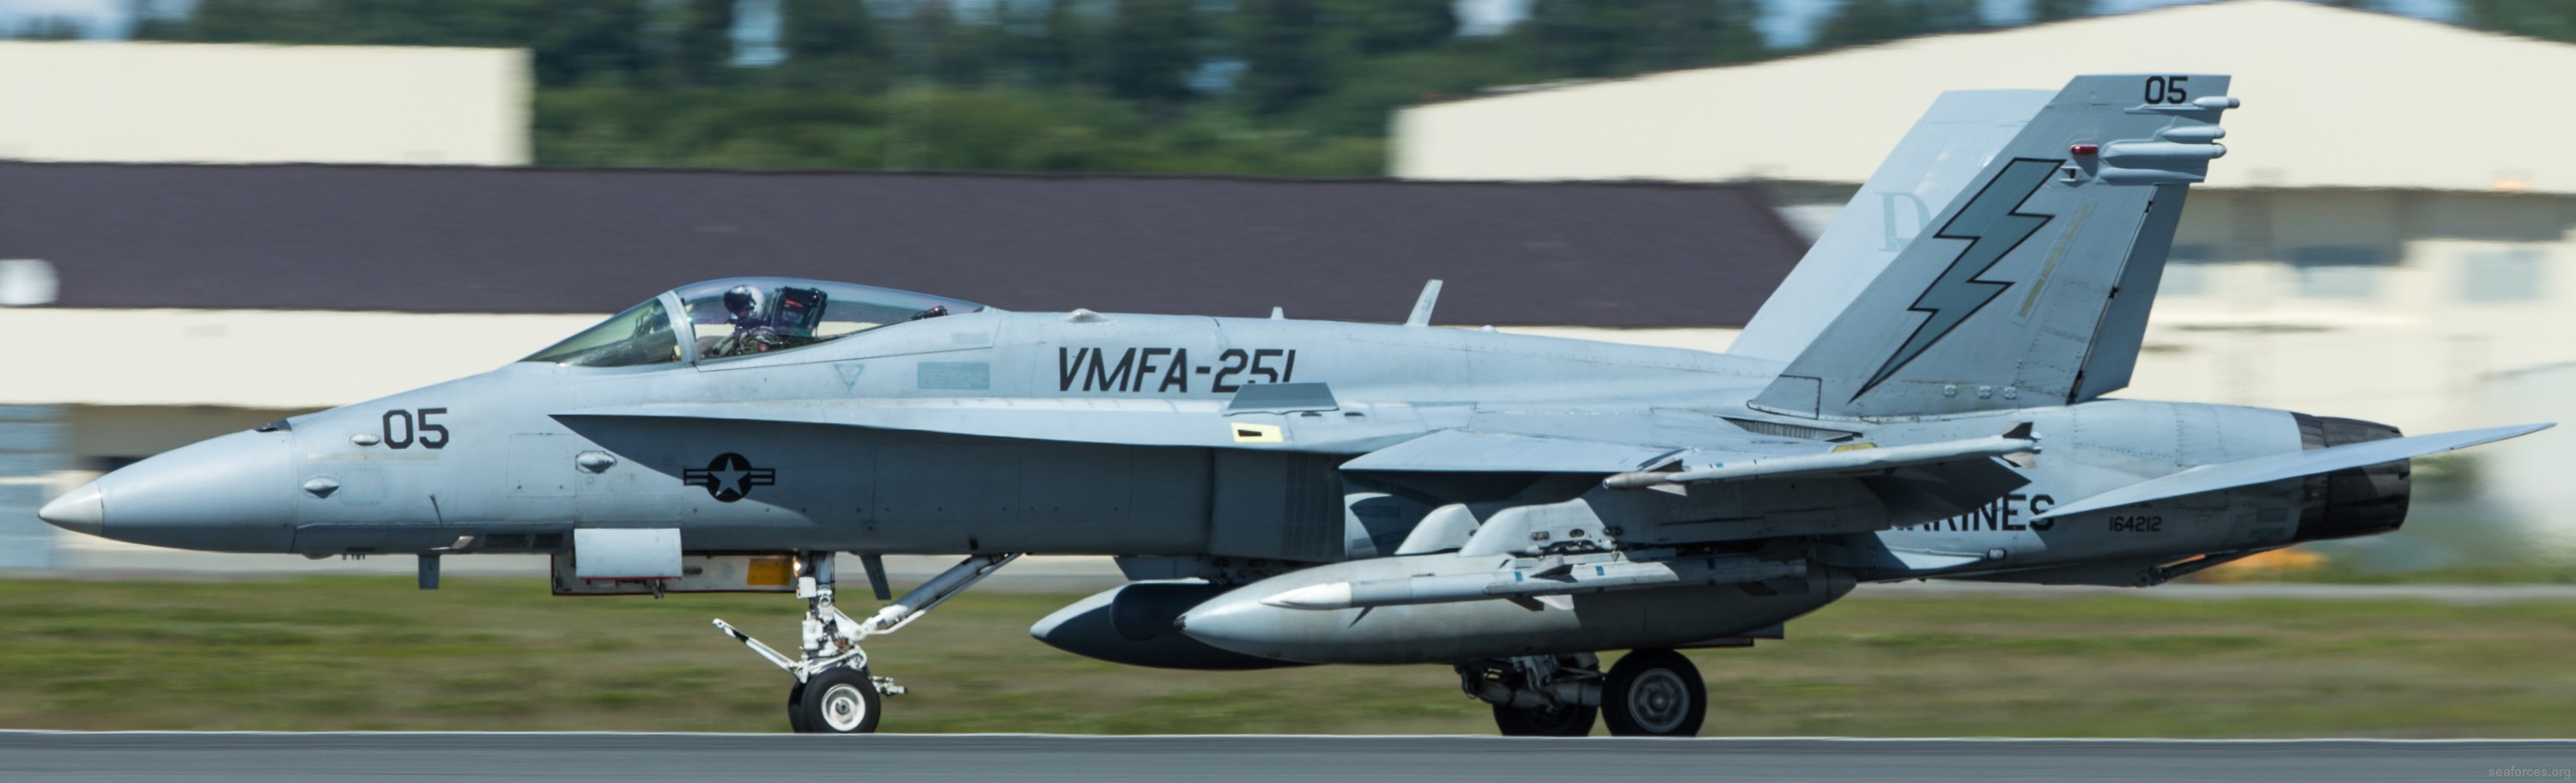 vmfa-251 thunderbolts marine fighter attack squadron f/a-18c hornet 106 joint base elmendorf richardson alaska